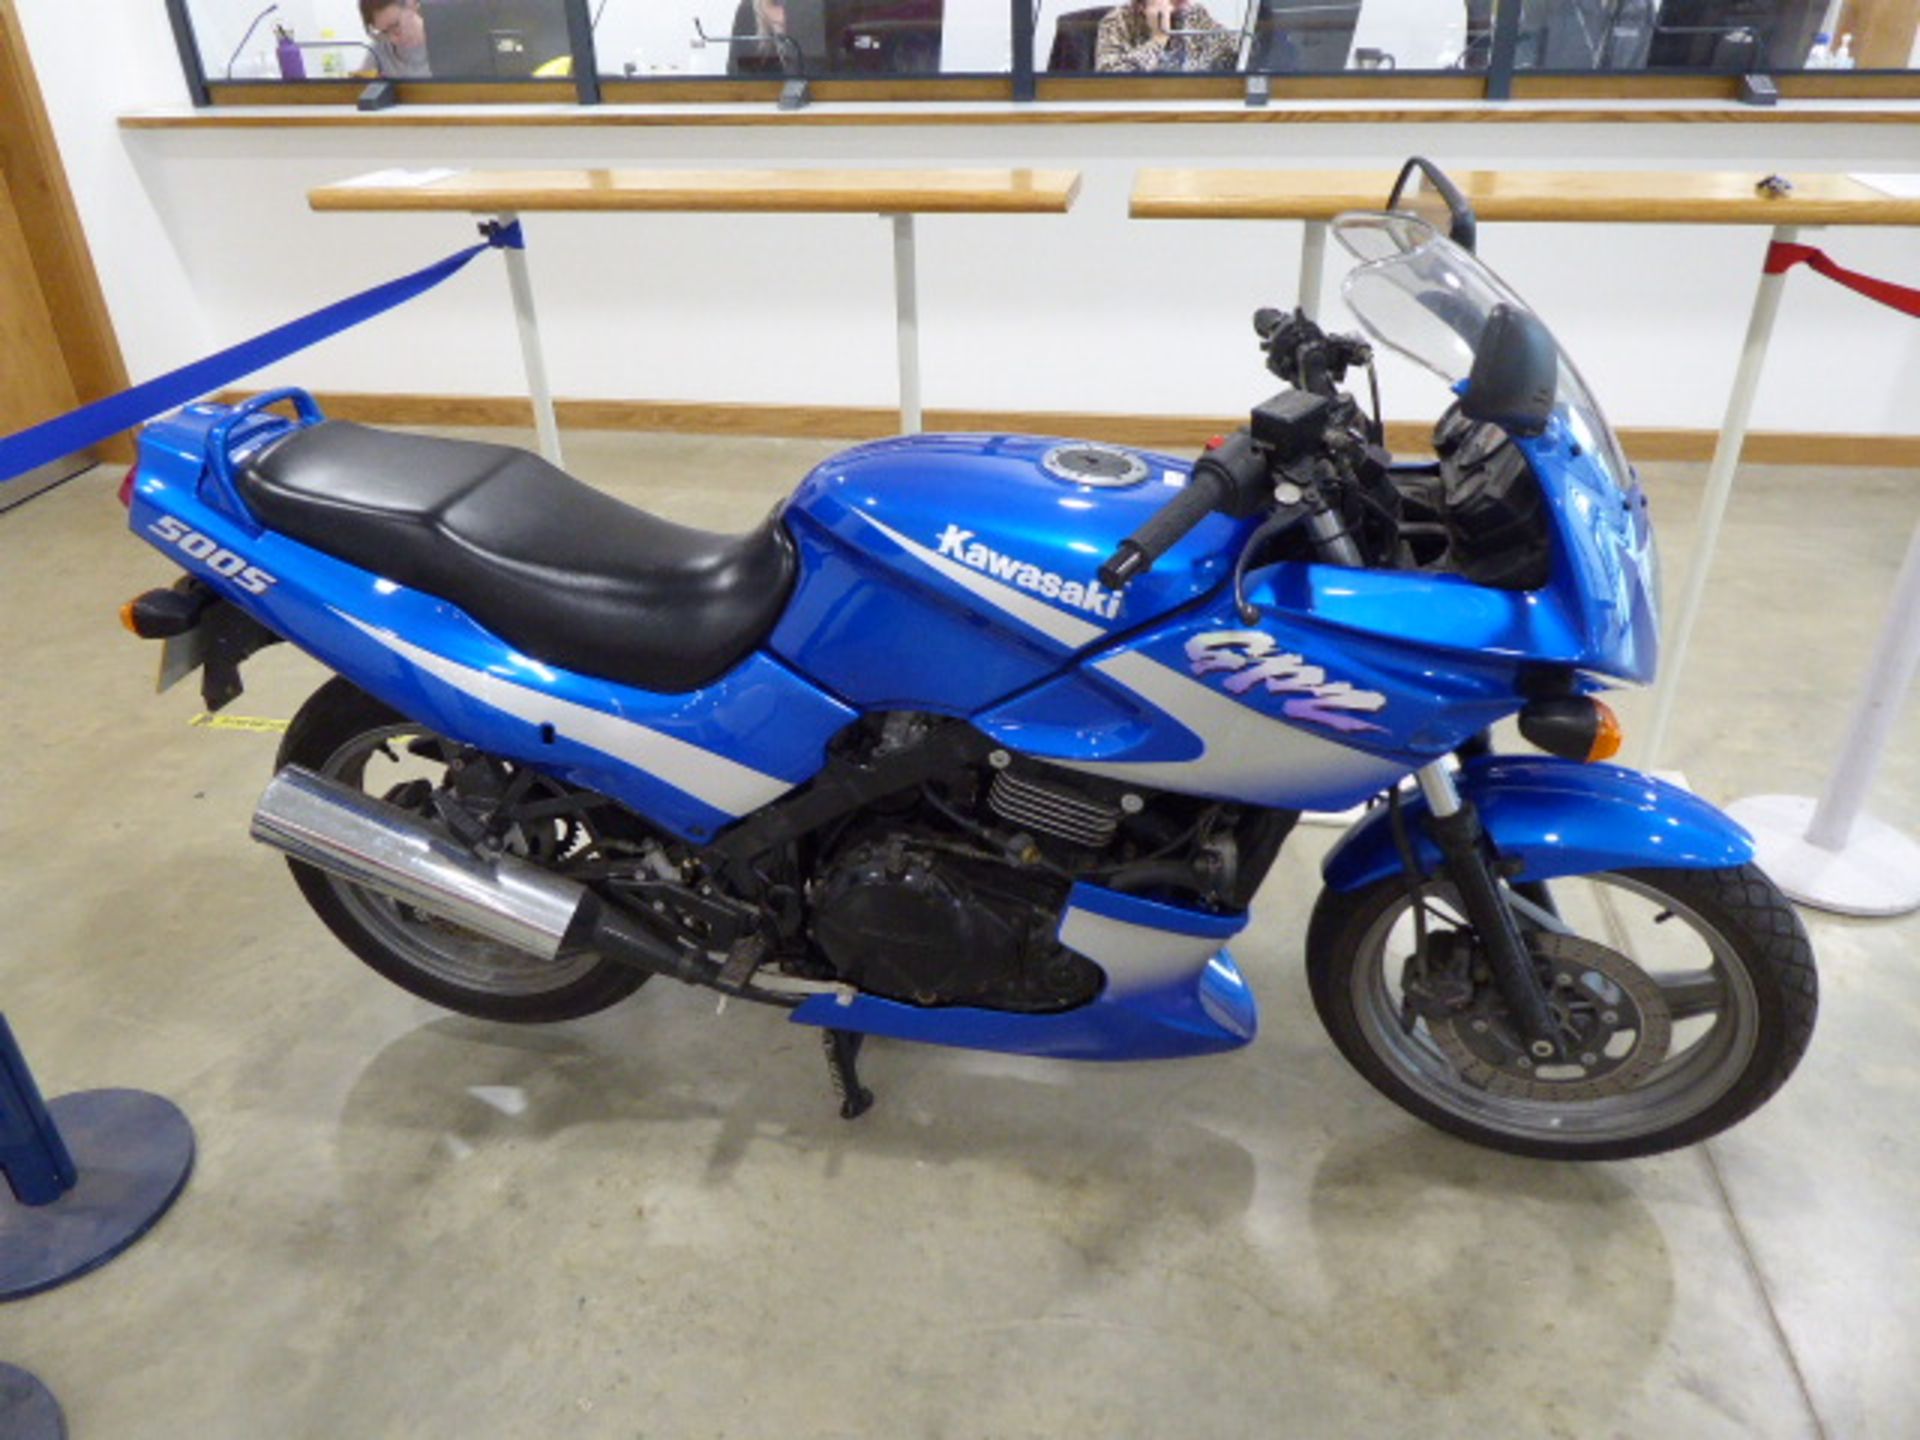 LN51 MKK (2002) Kawasaki GPZ500 Motorcycle, 498cc, petrol, 1344 miles, one owner. The motorcycle has - Image 2 of 7